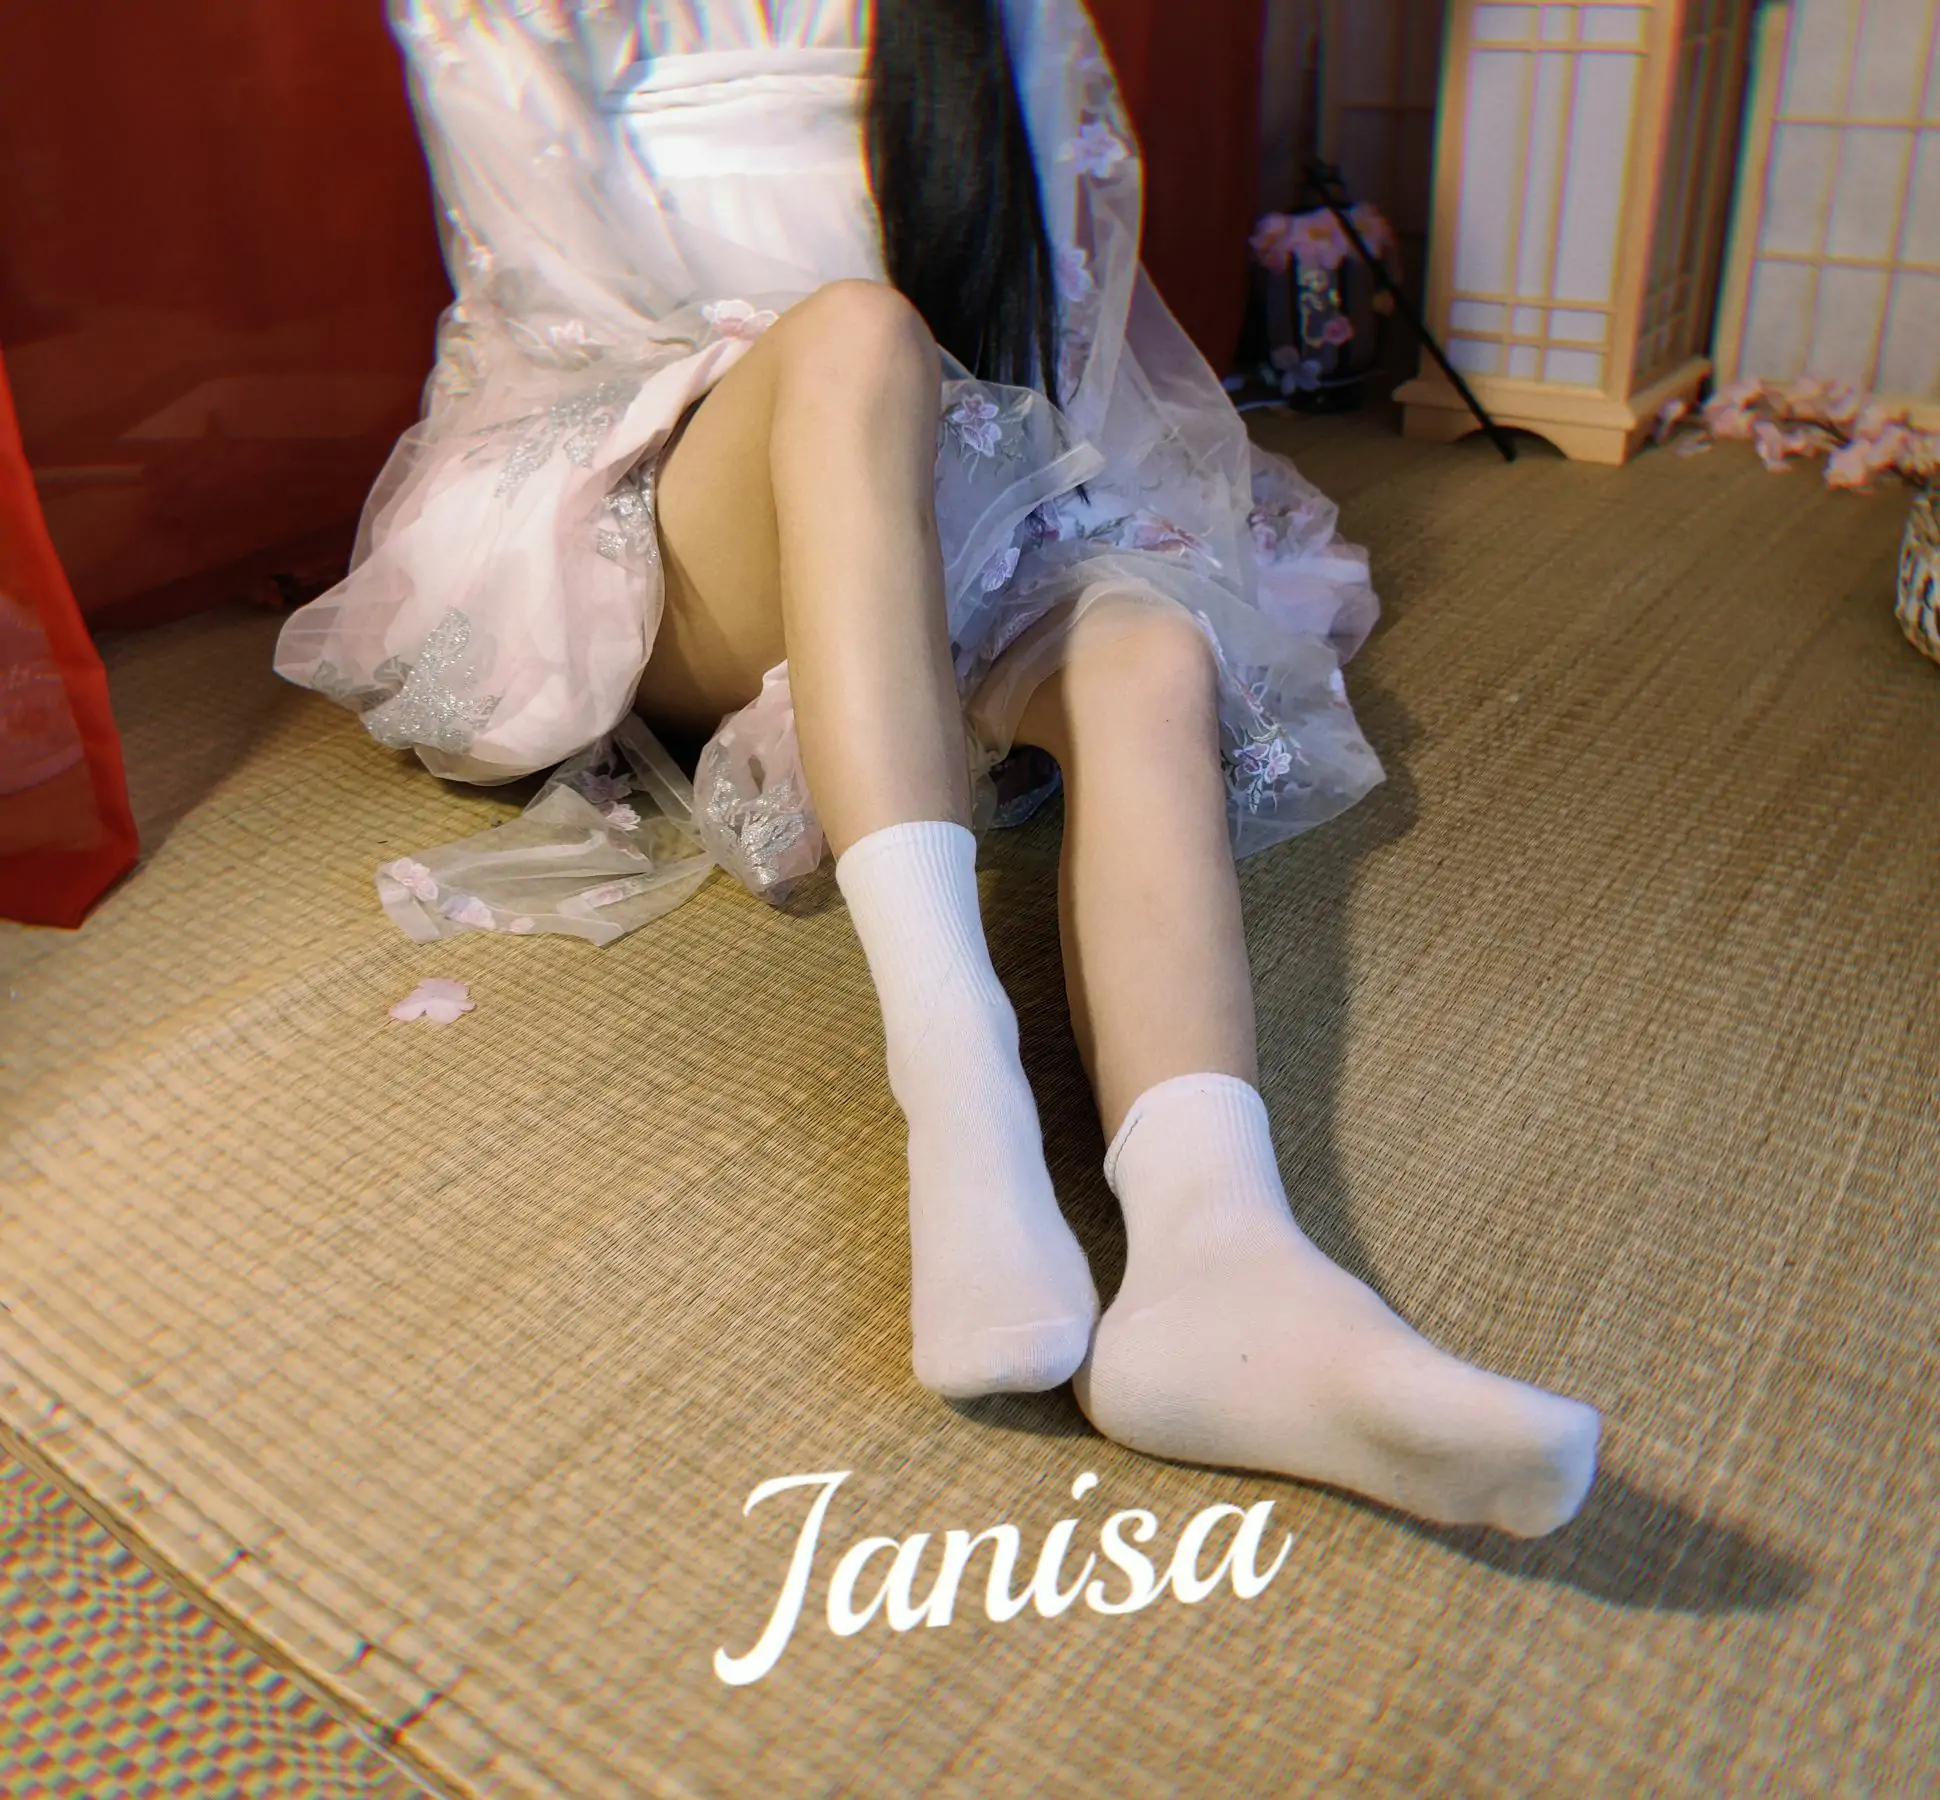 Janisa - 朝花向晚